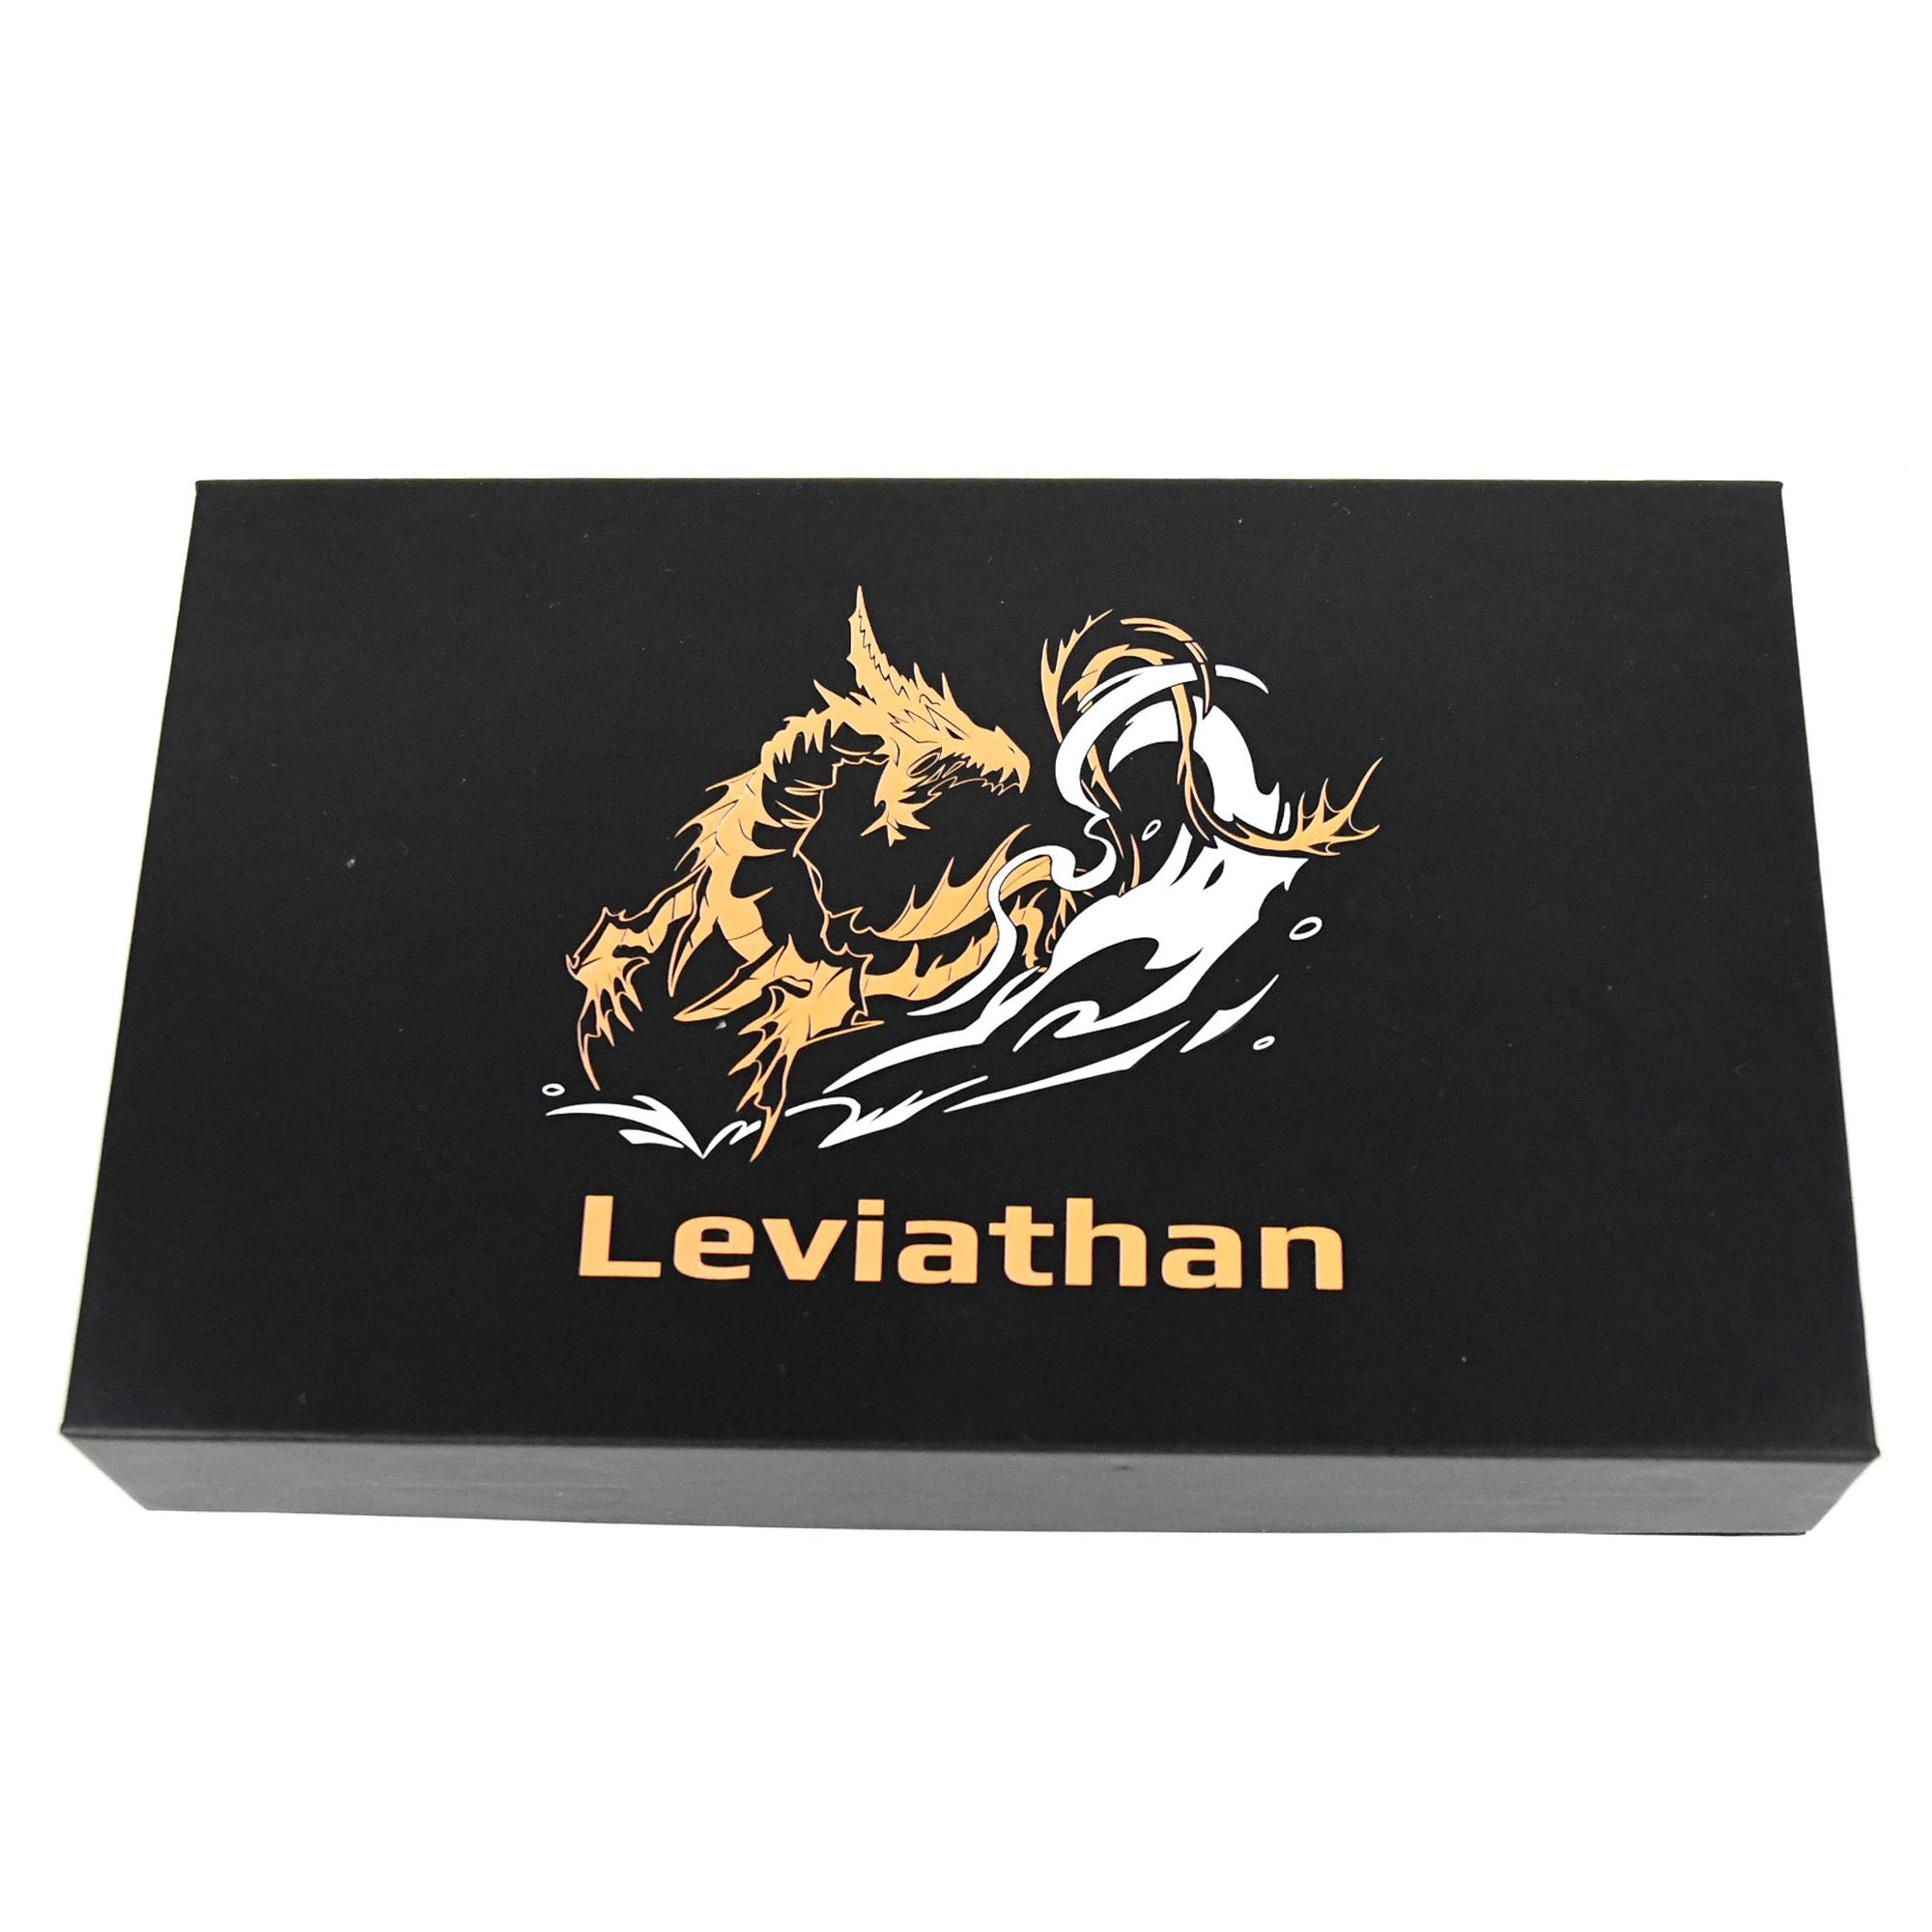 LDO Leviathan V1.2 Control Board